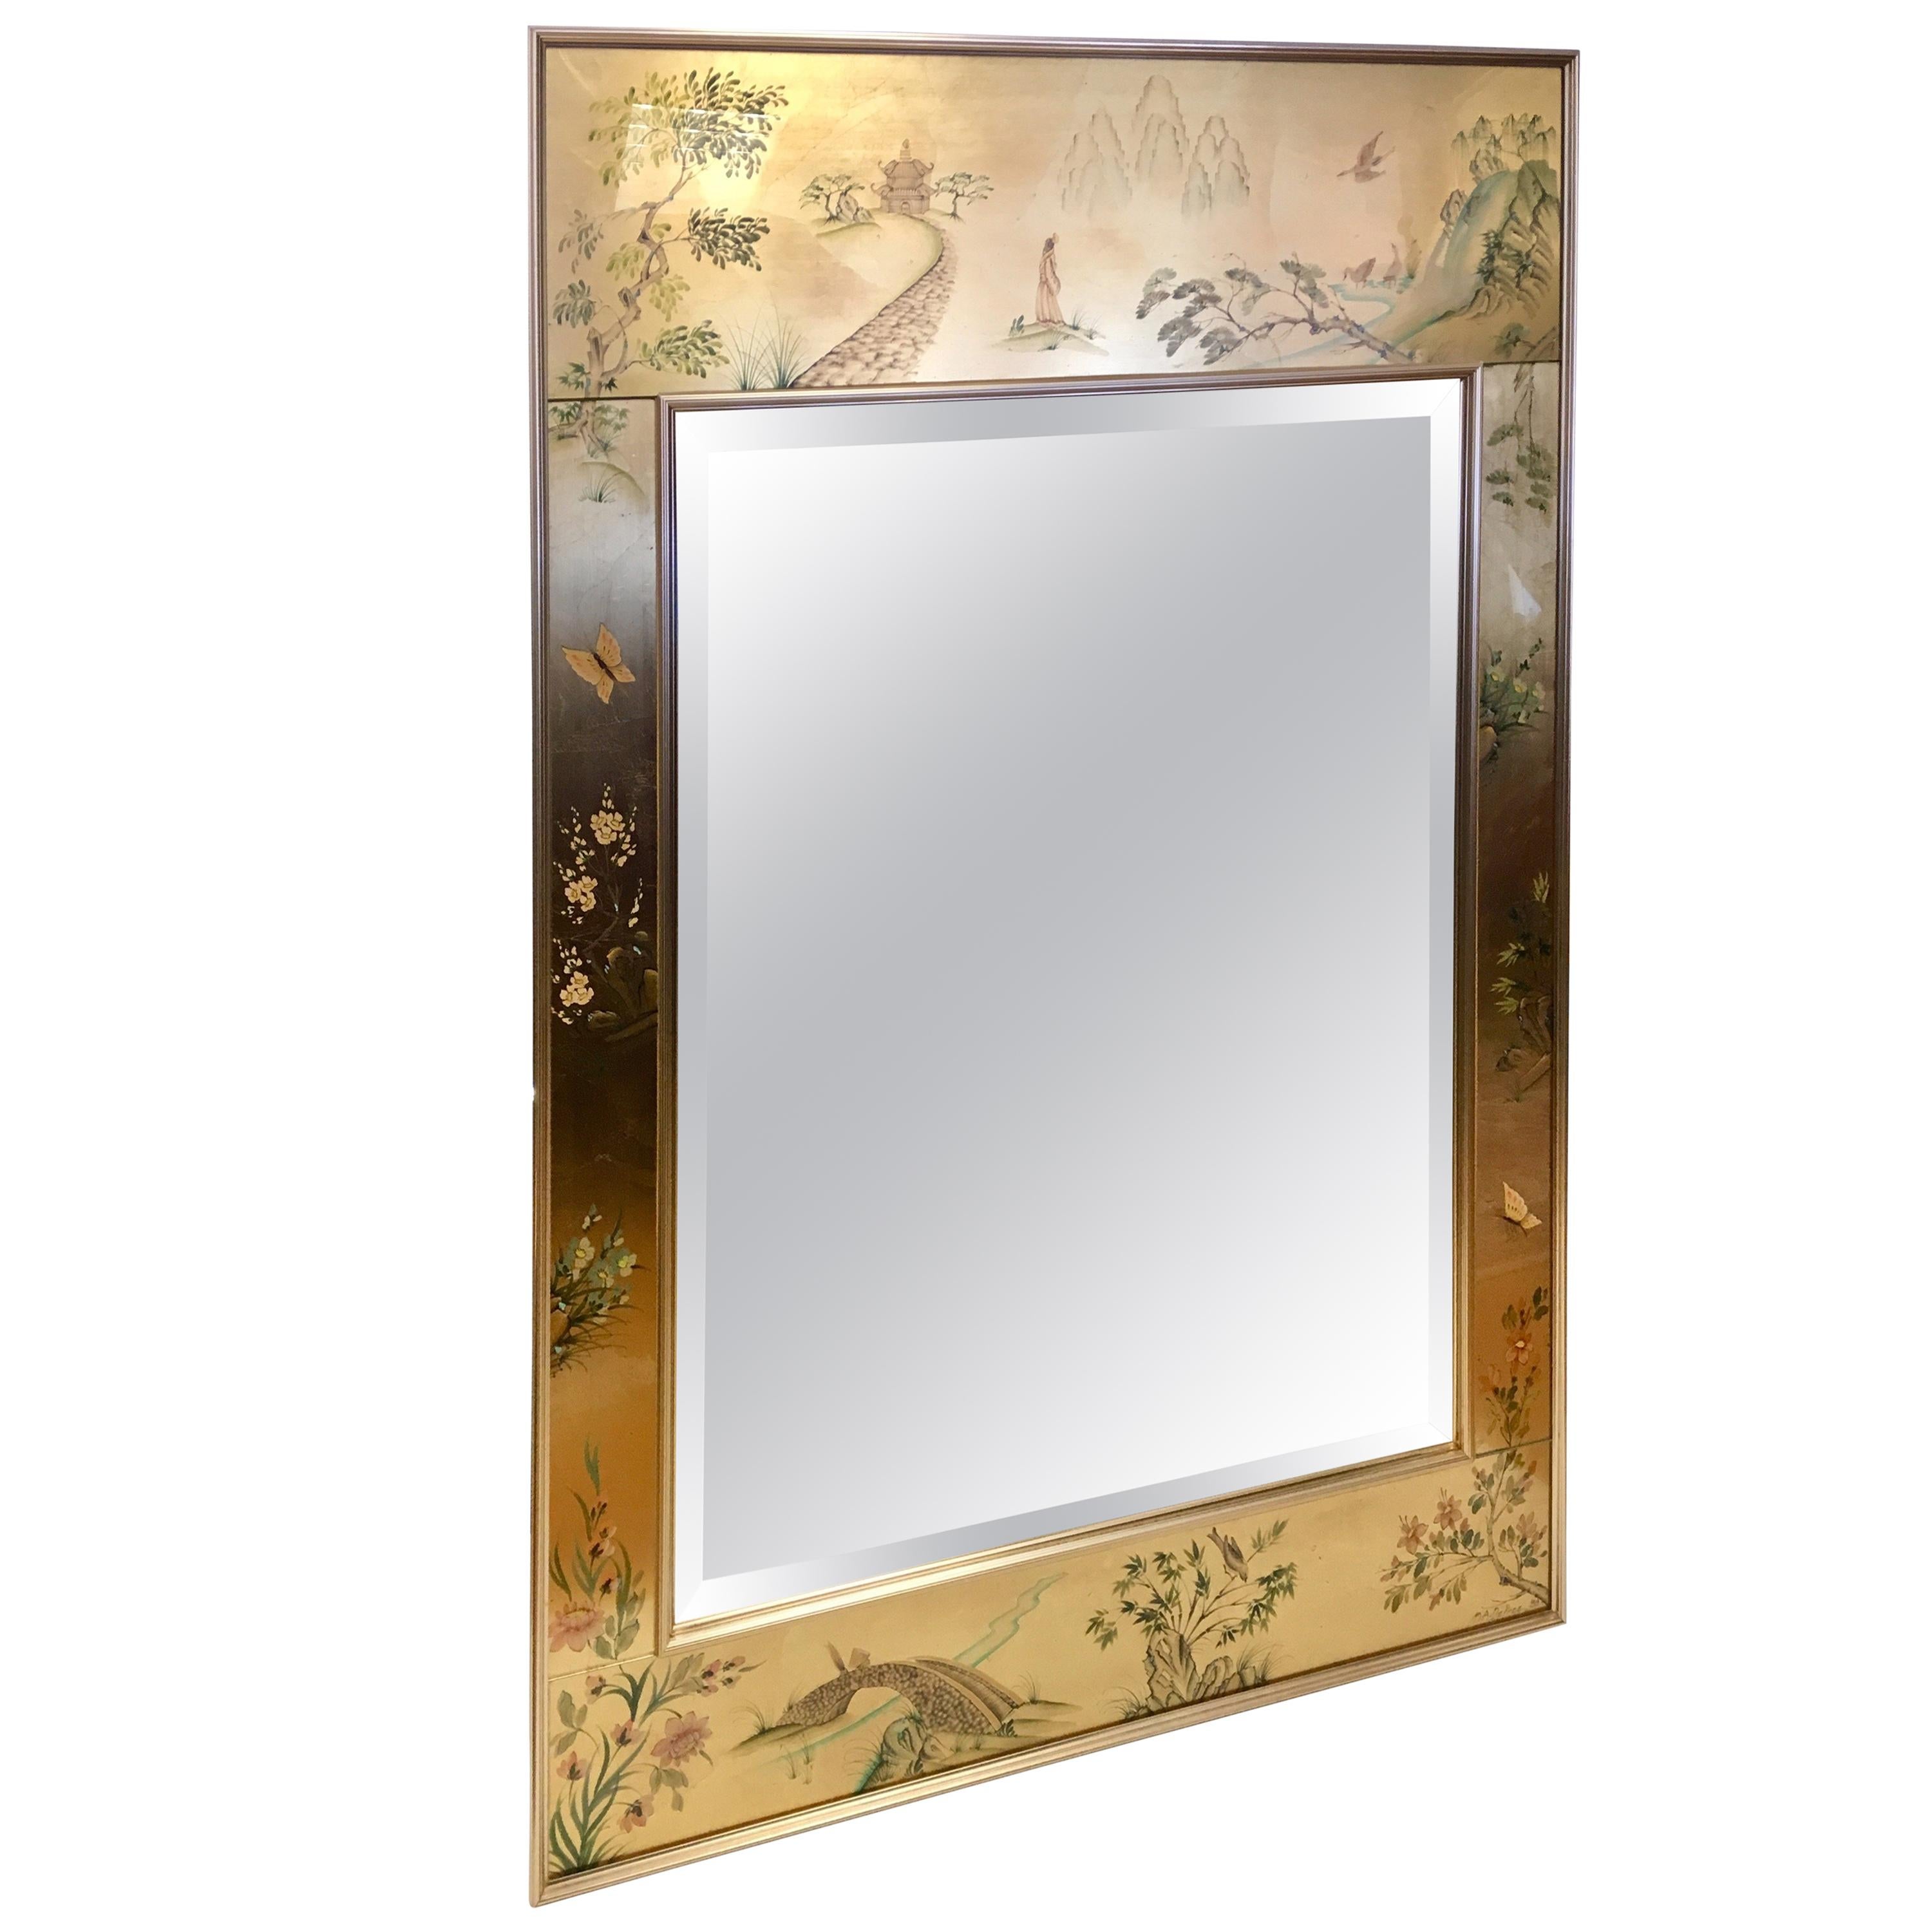 Signed LaBarge La Barge Eglomise Reverse Painted Chinoiserie Wall Mirror DePrez